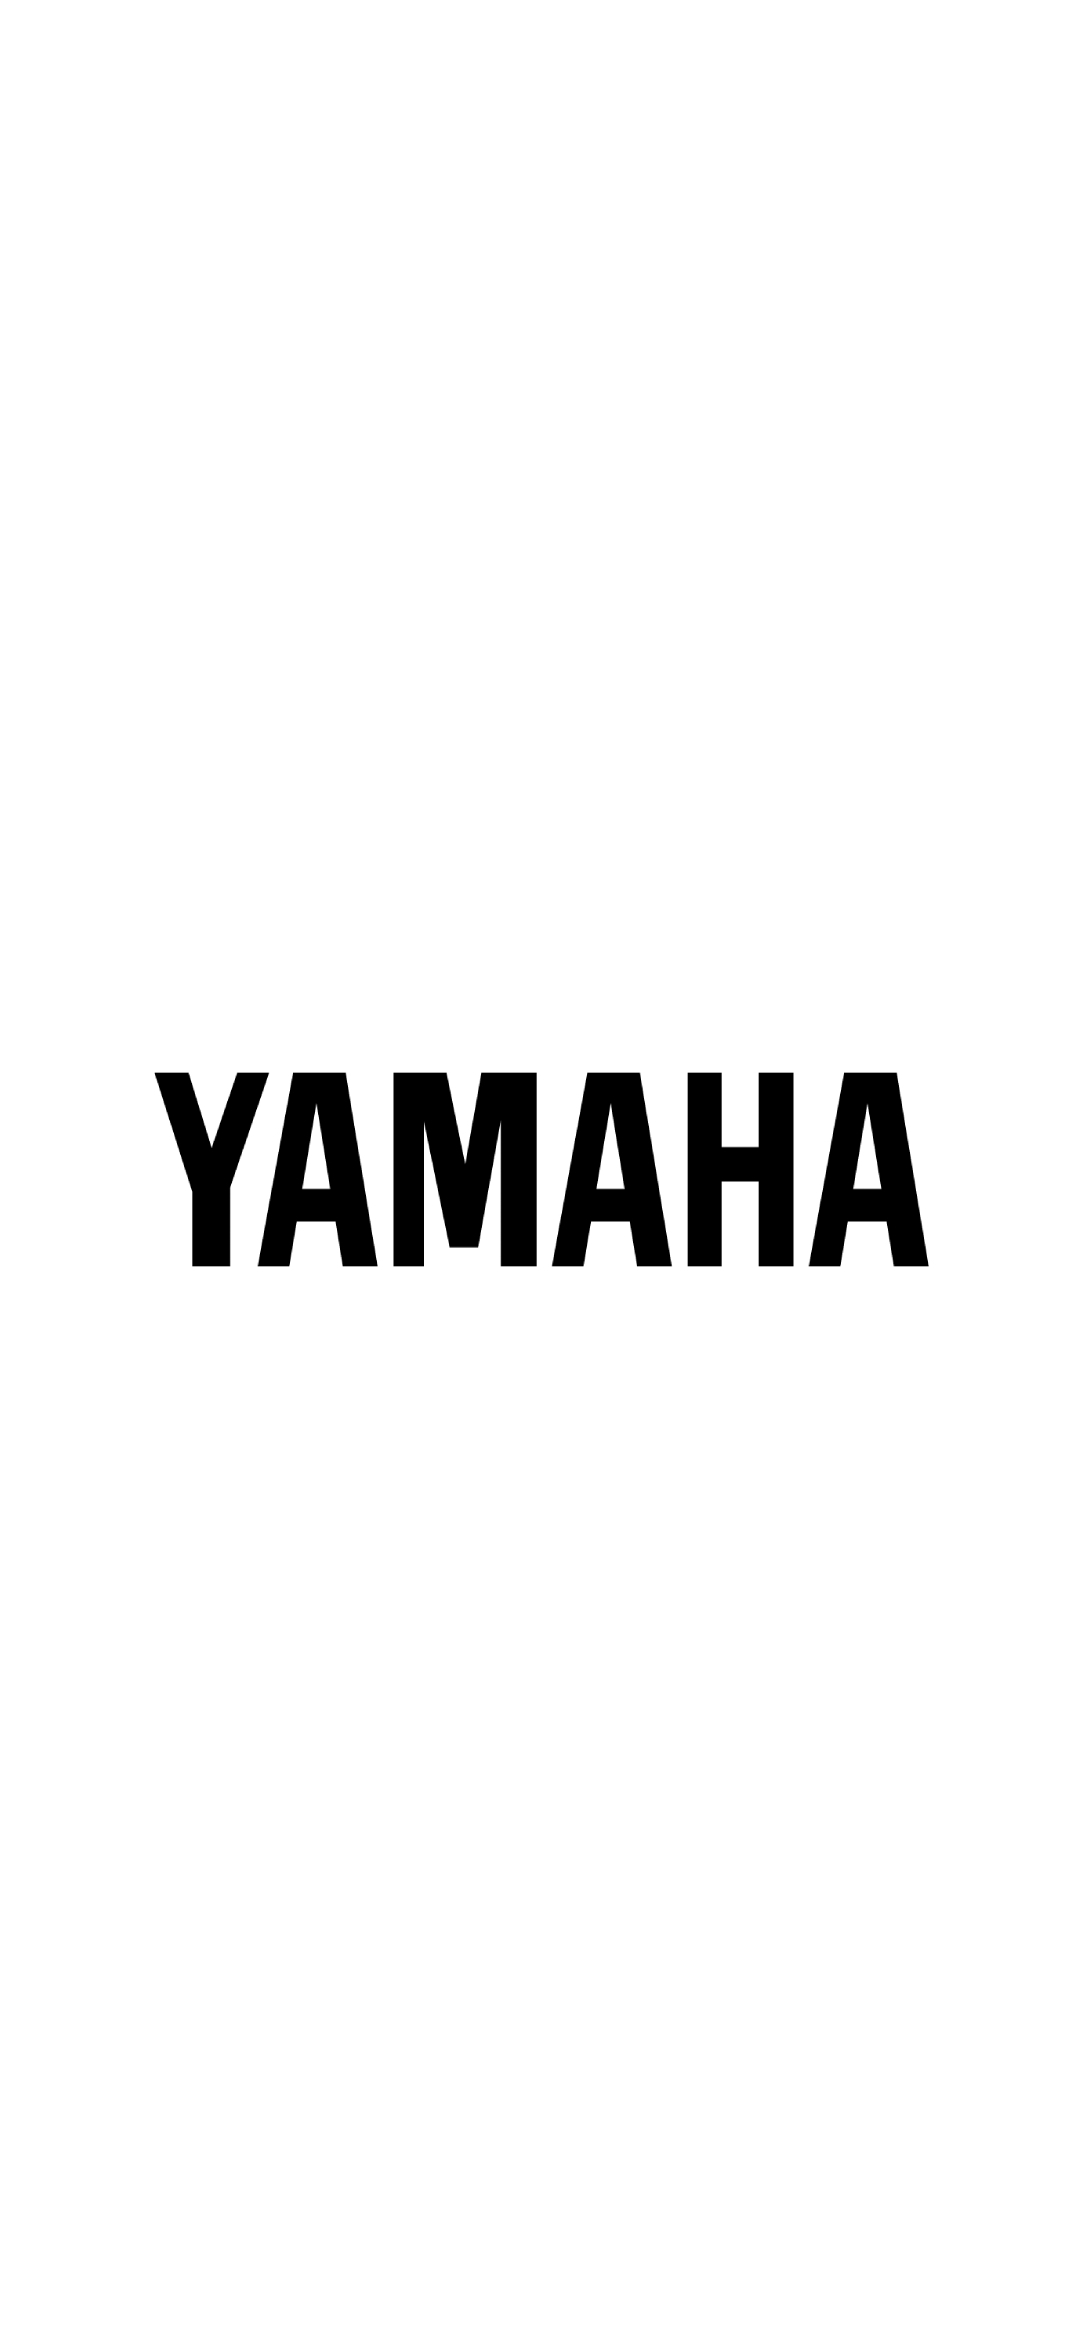 Yamaha ヤマハ Zenfone 6 壁紙 待ち受け スマラン